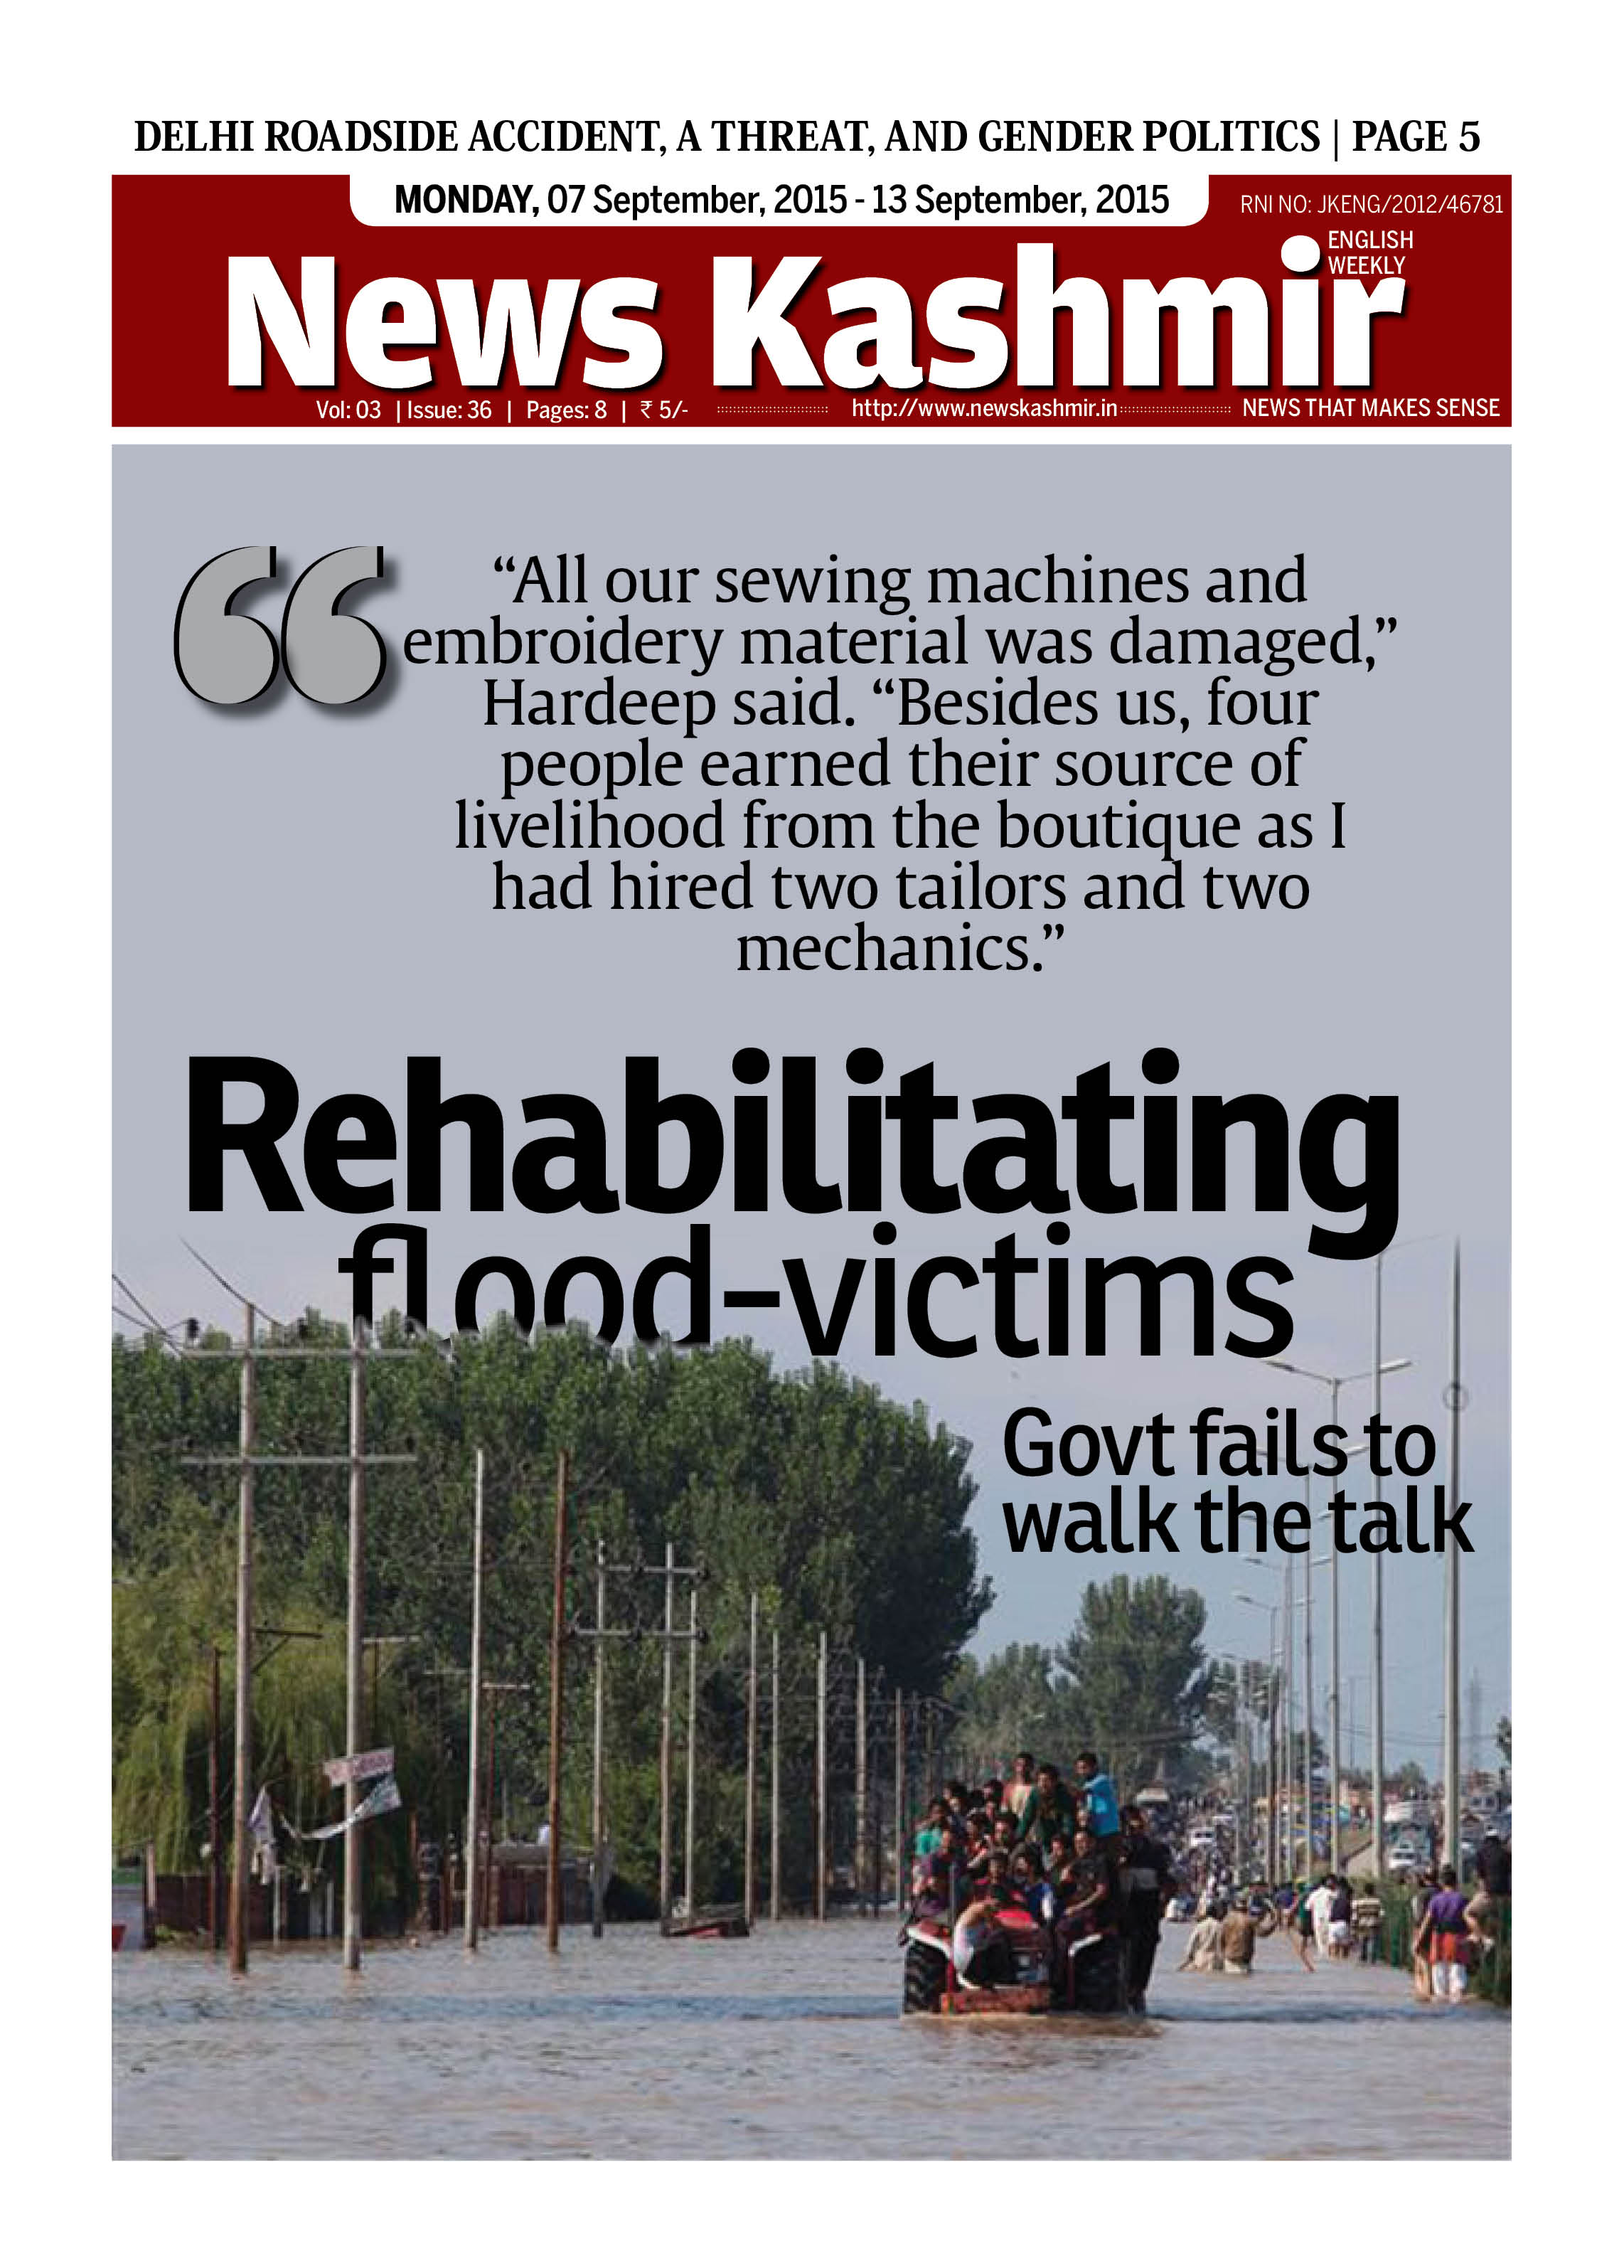 Rehabilitating flood-victims-Govt fails to walk the talk